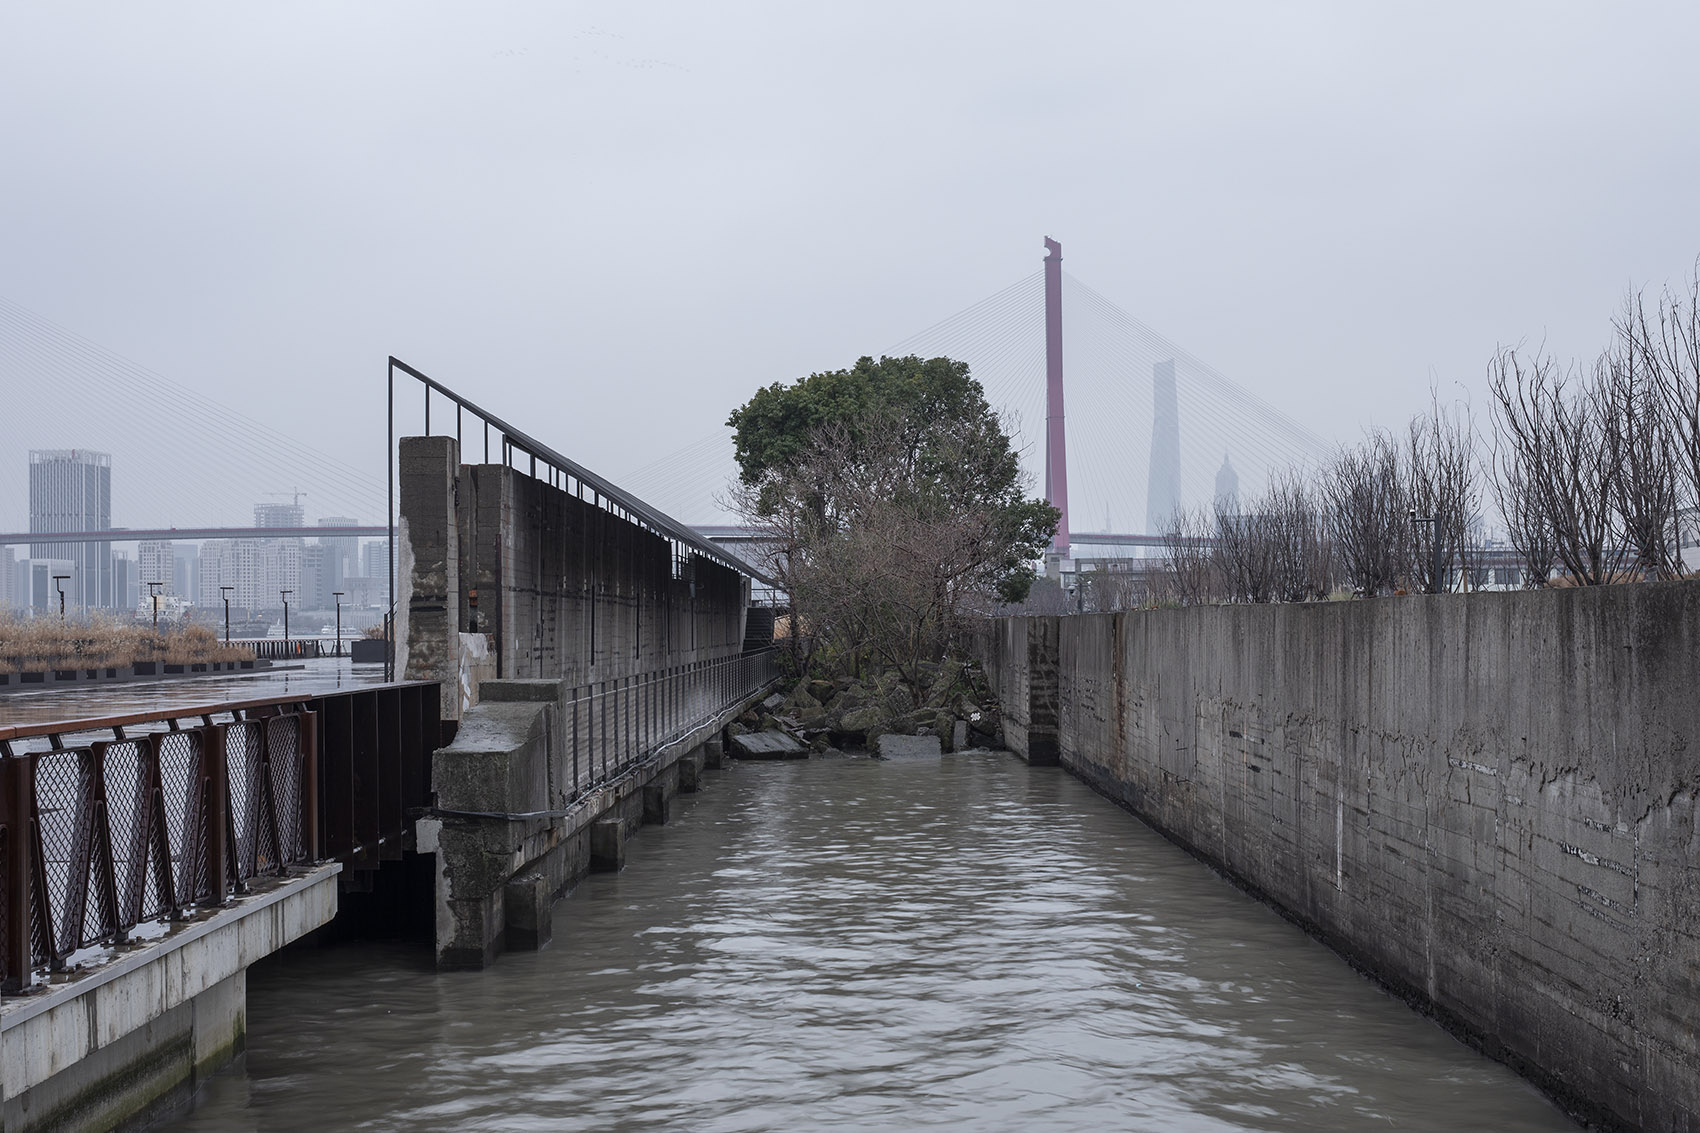 002-riverside-passage-yang-pu-riverfront-urban-space-renovation-china-by-atelier.jpg